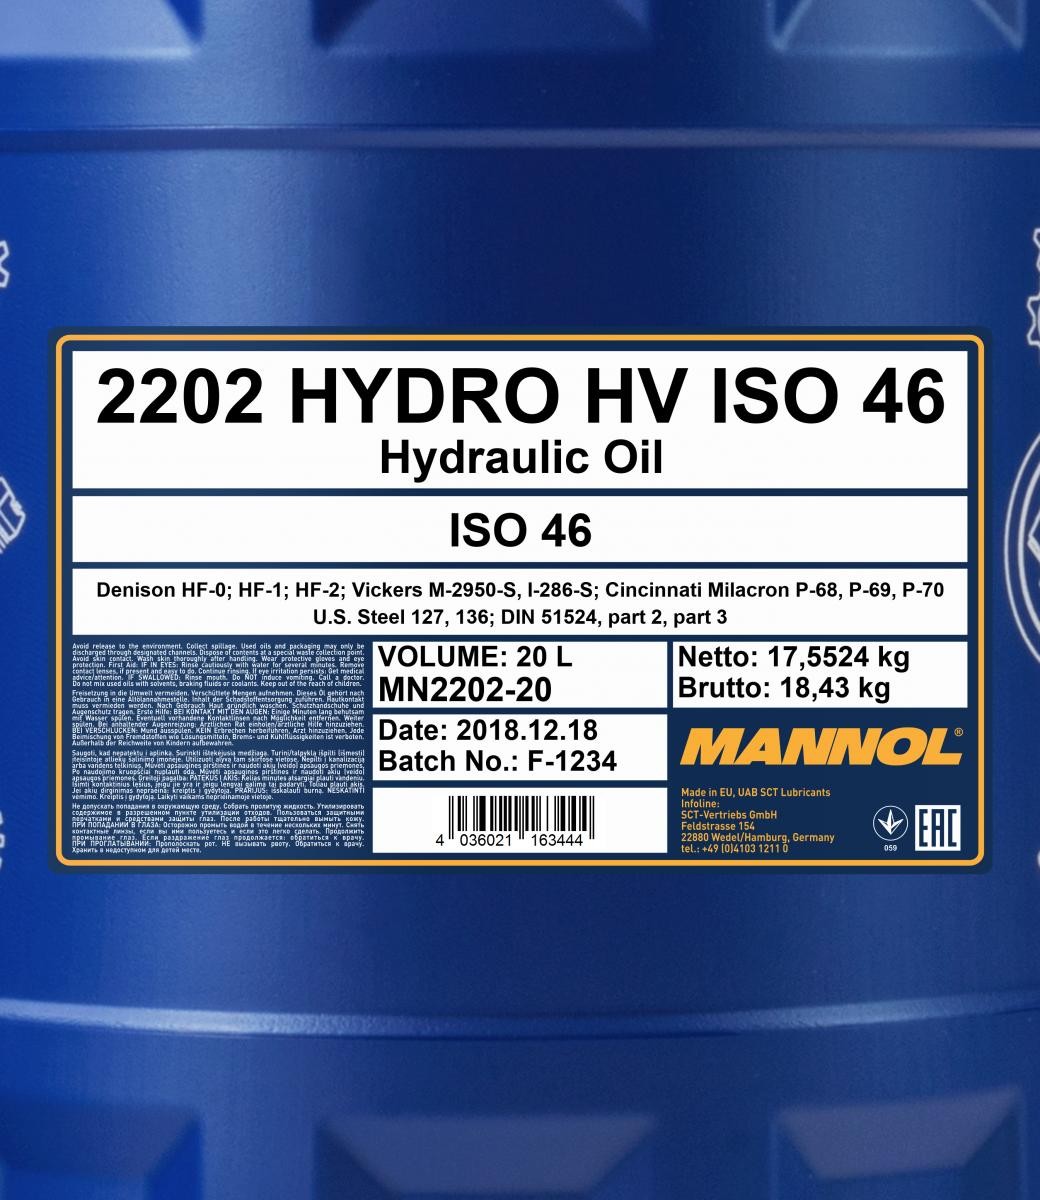 Mannol 2202 Hydro HV ISO 46 Hydrauliköl 20 Liter